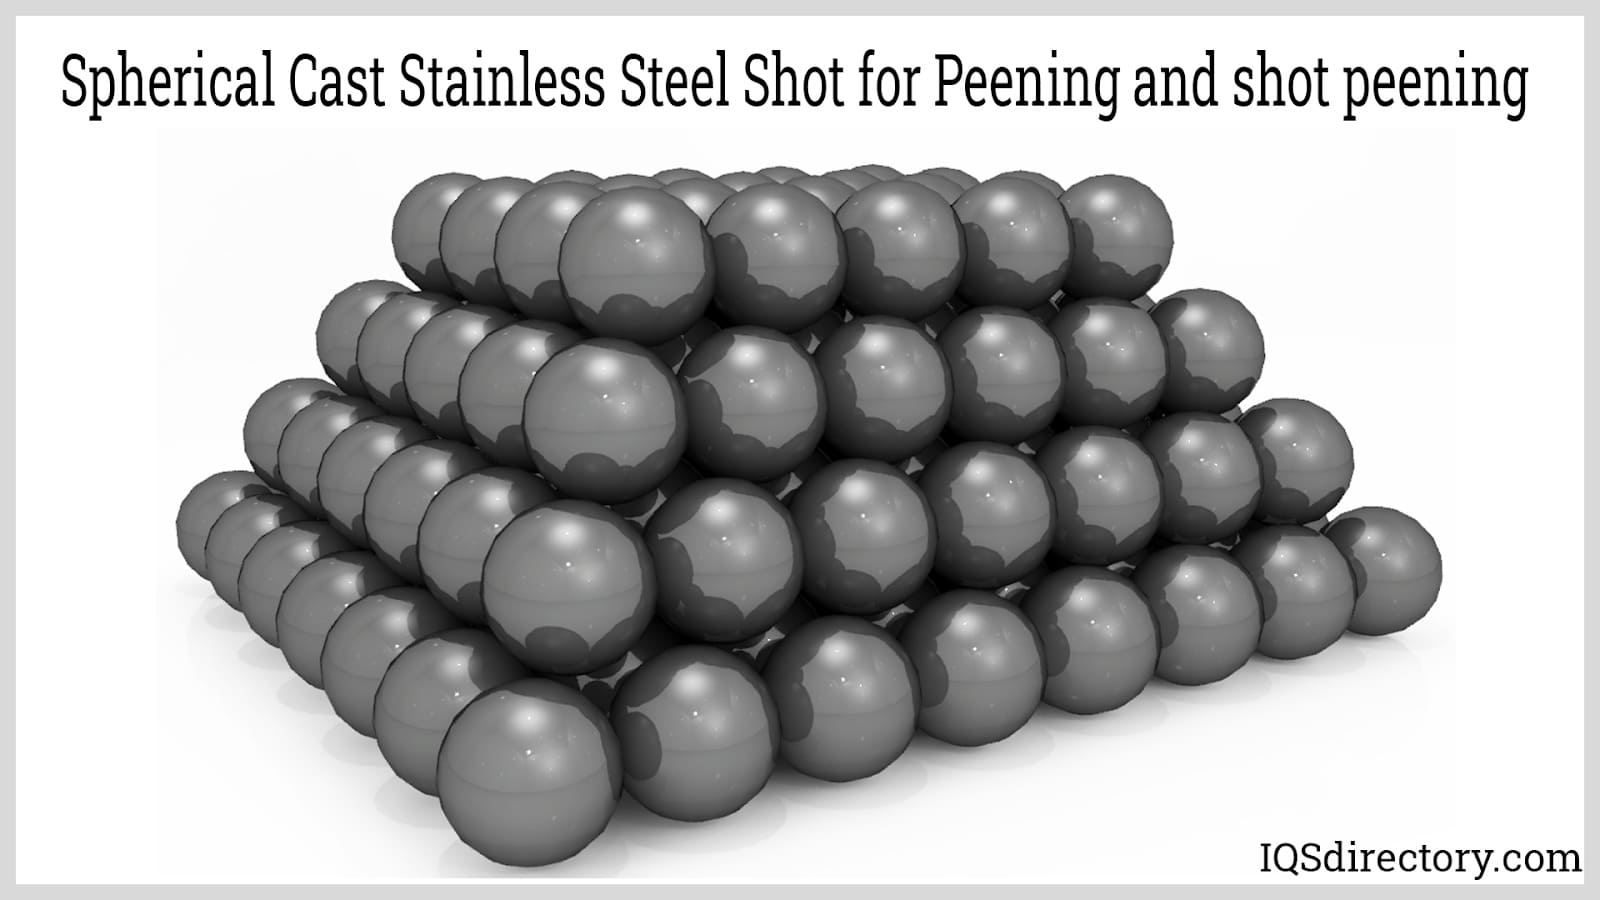 Spherical Cast Stainless Steel Shot for Peening and shot peening